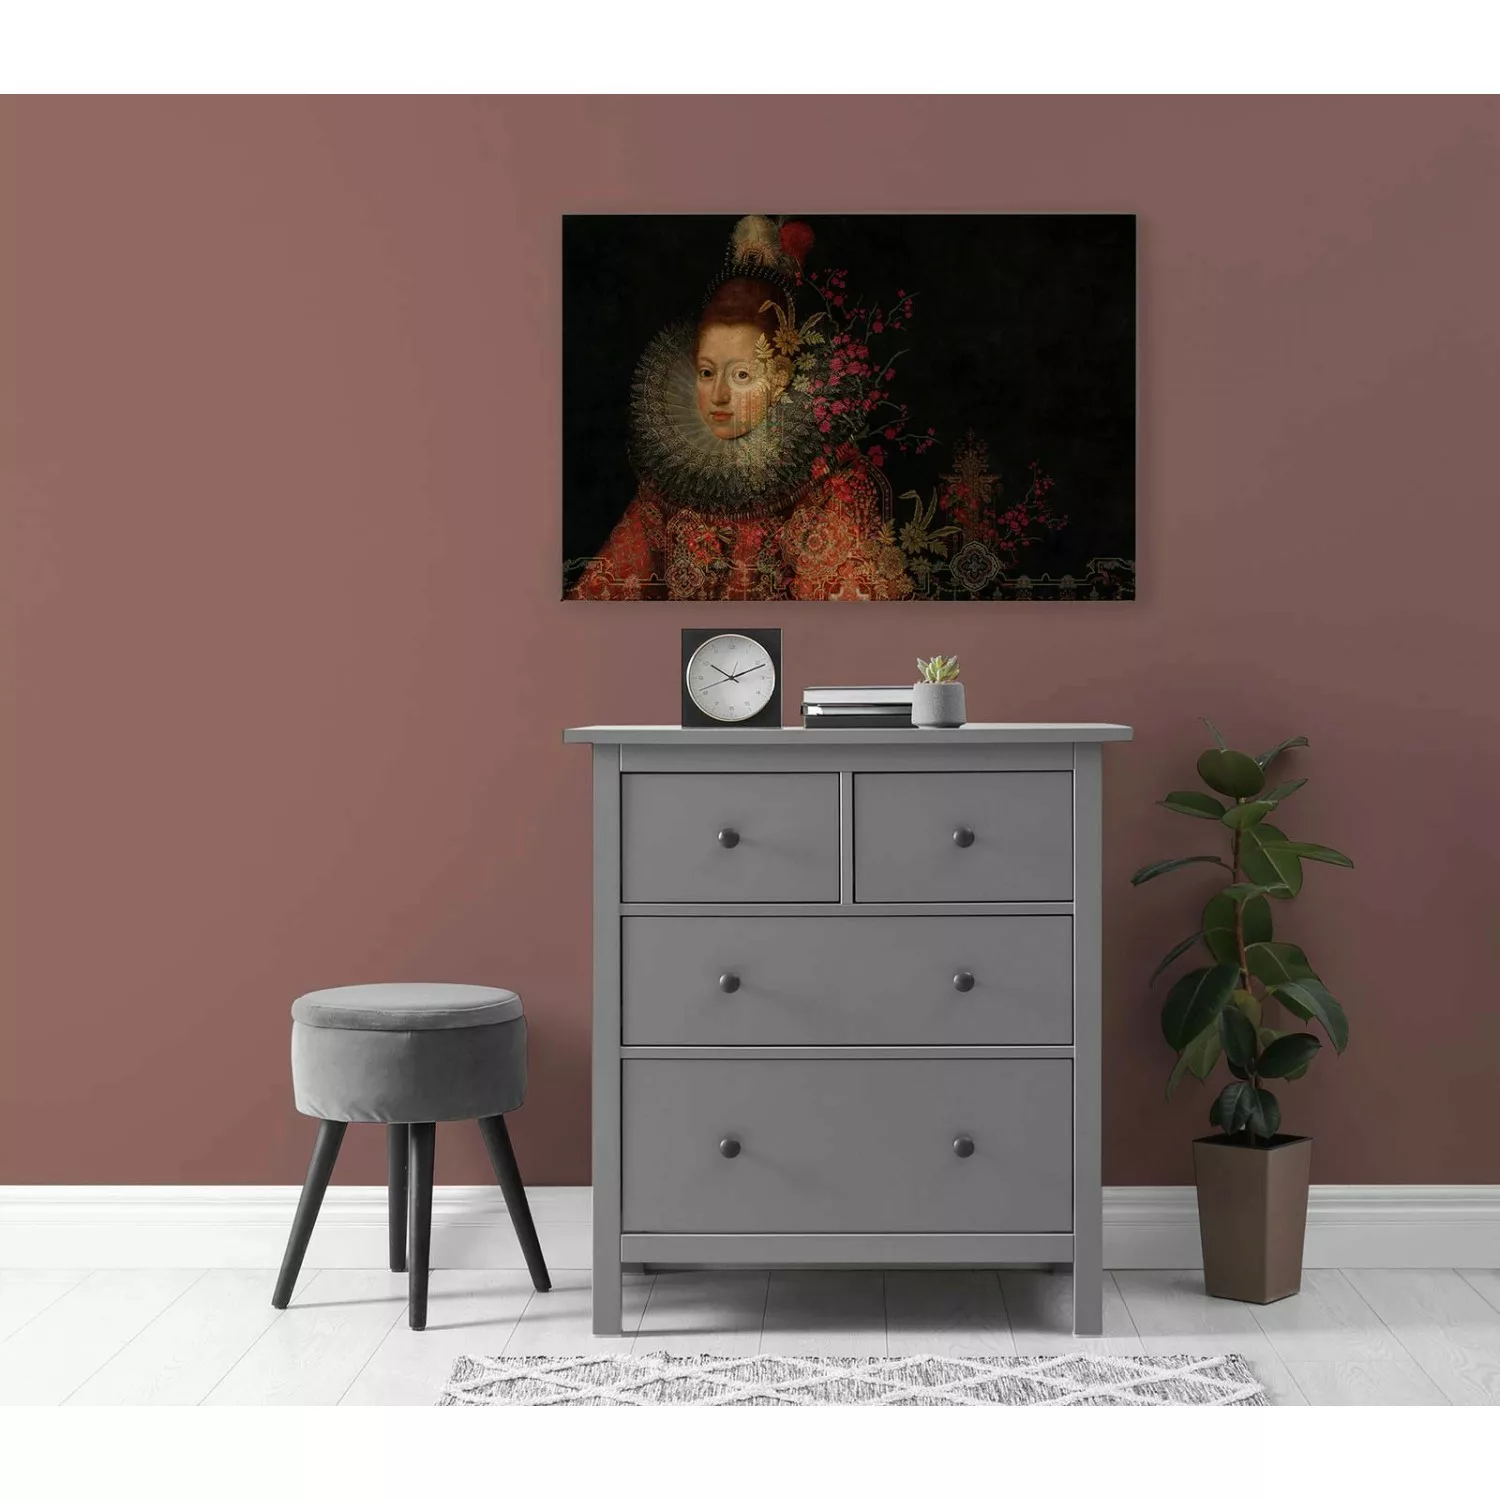 Bricoflor Leinwand Gemälde In Öl Optik Wandbild Ausgefallen Leinwandbild Po günstig online kaufen